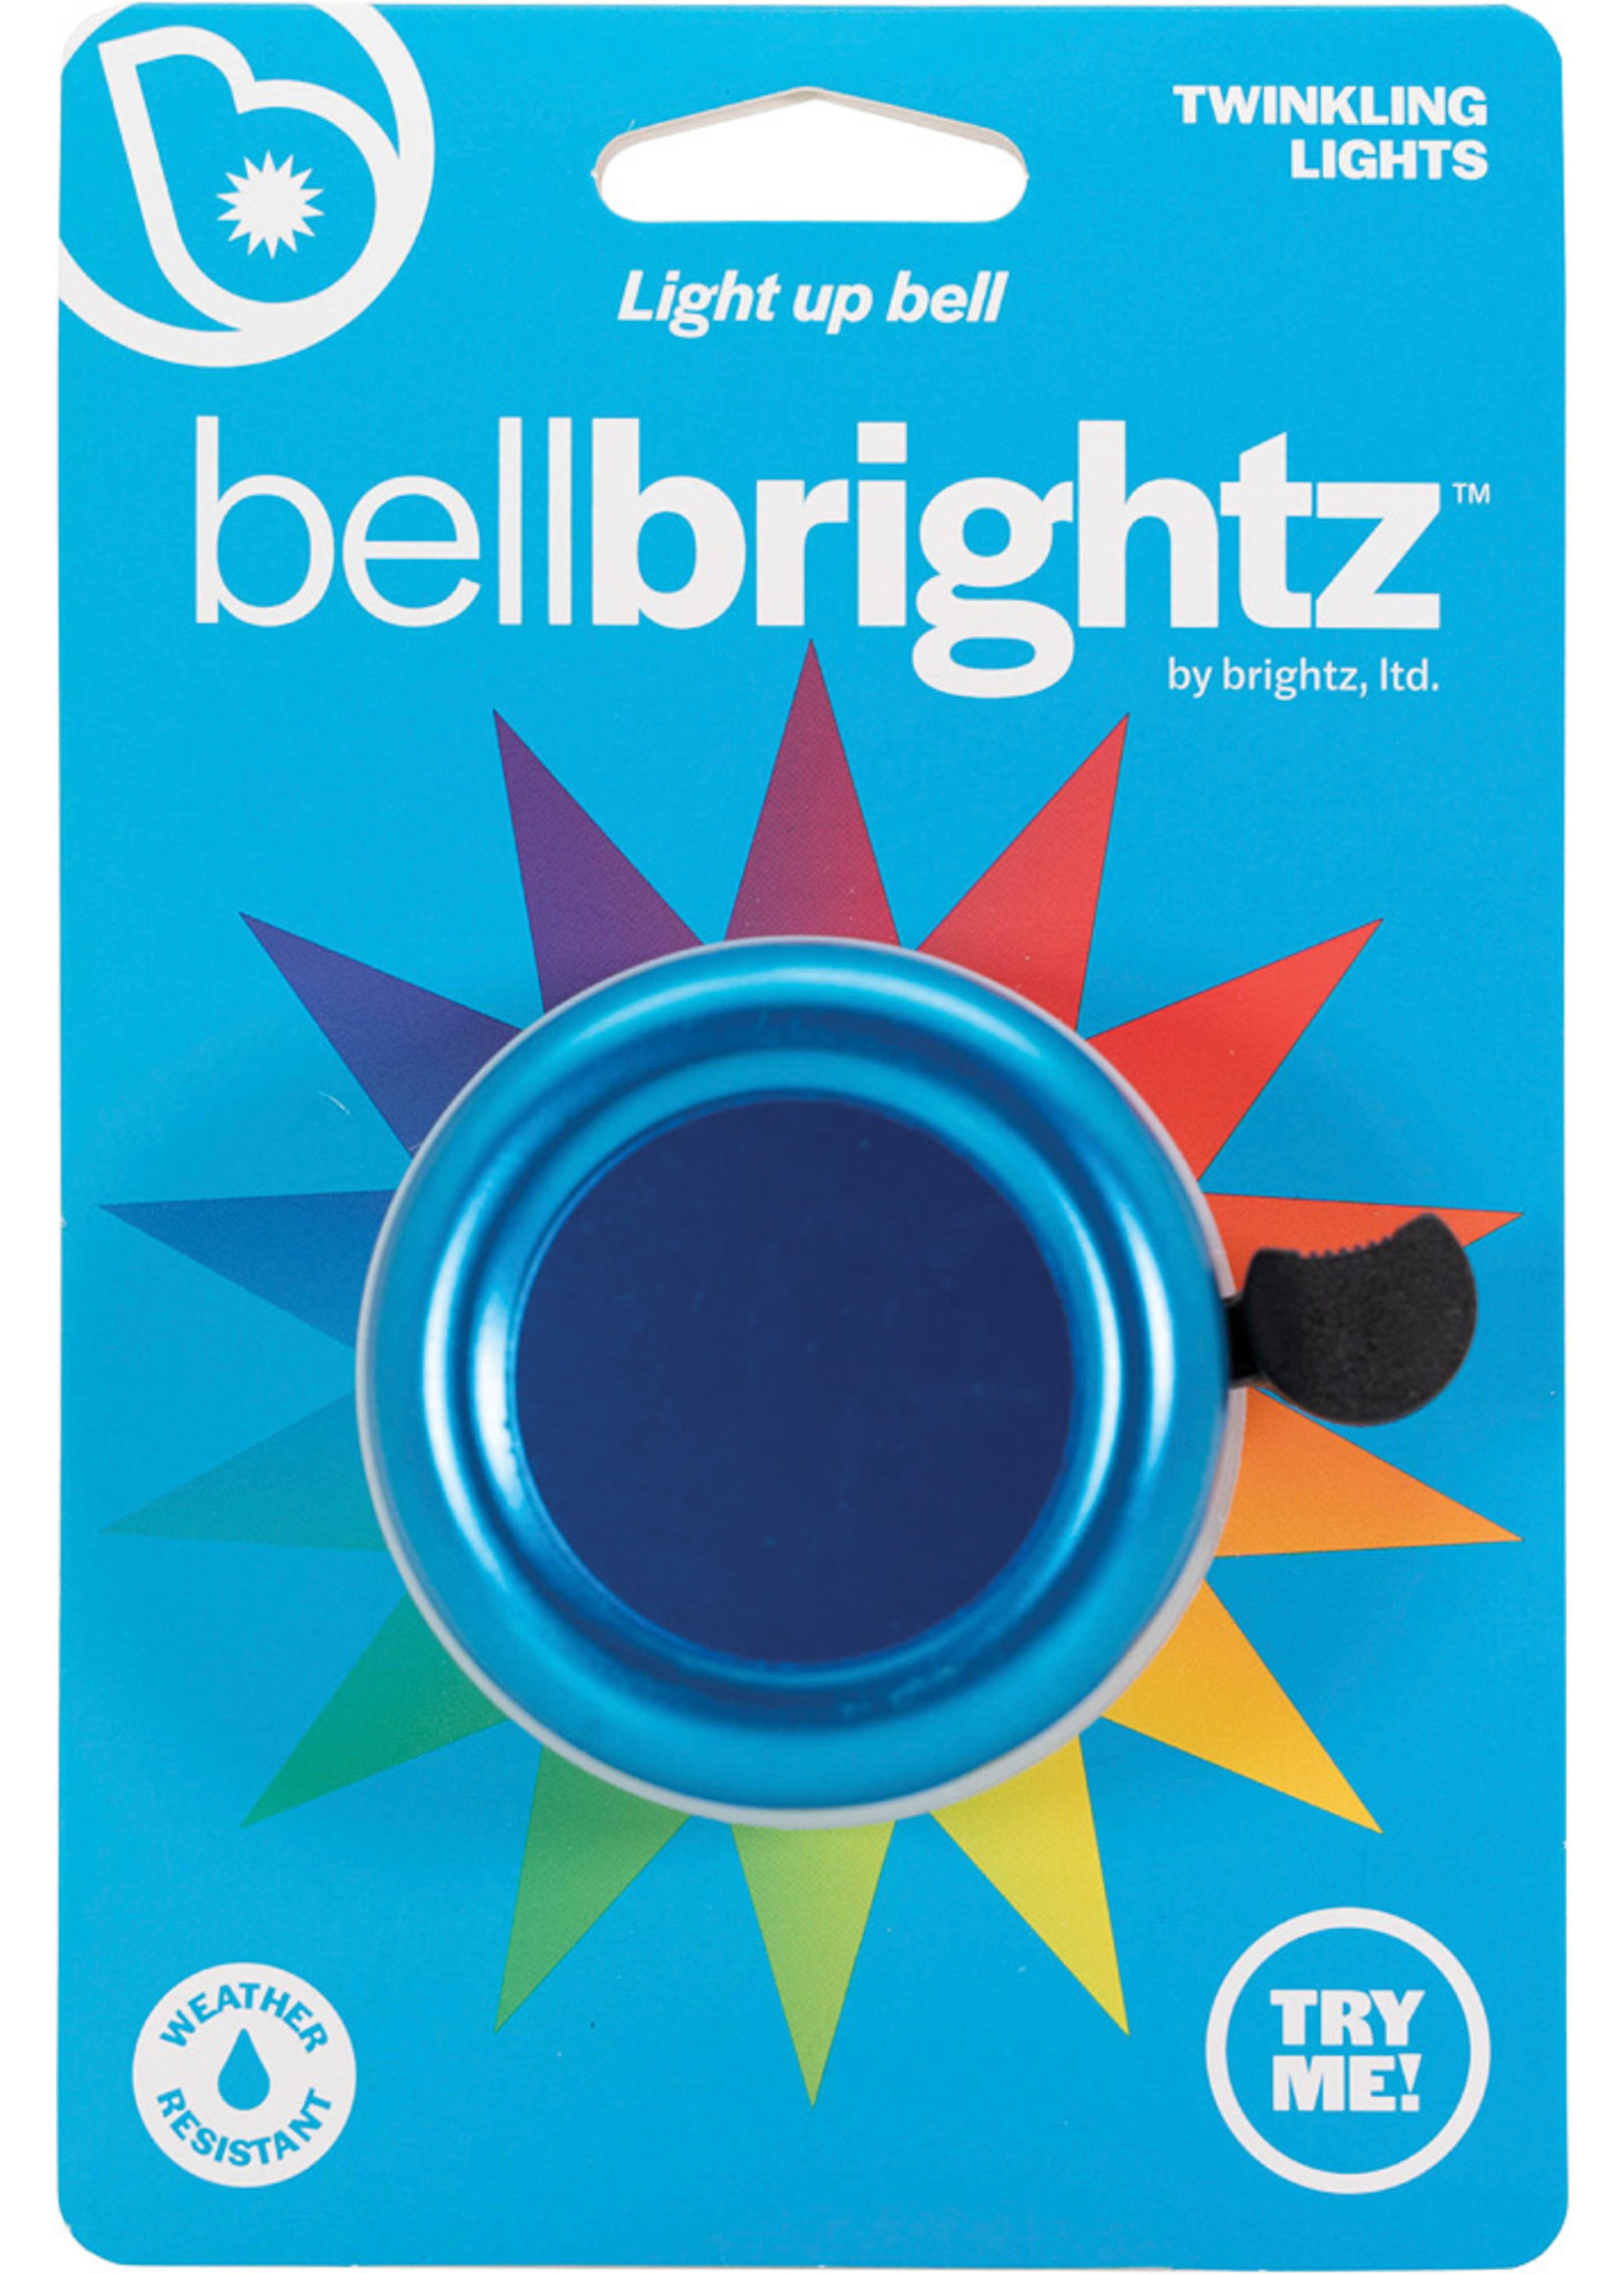 Brightz Bellbrightz - Blue